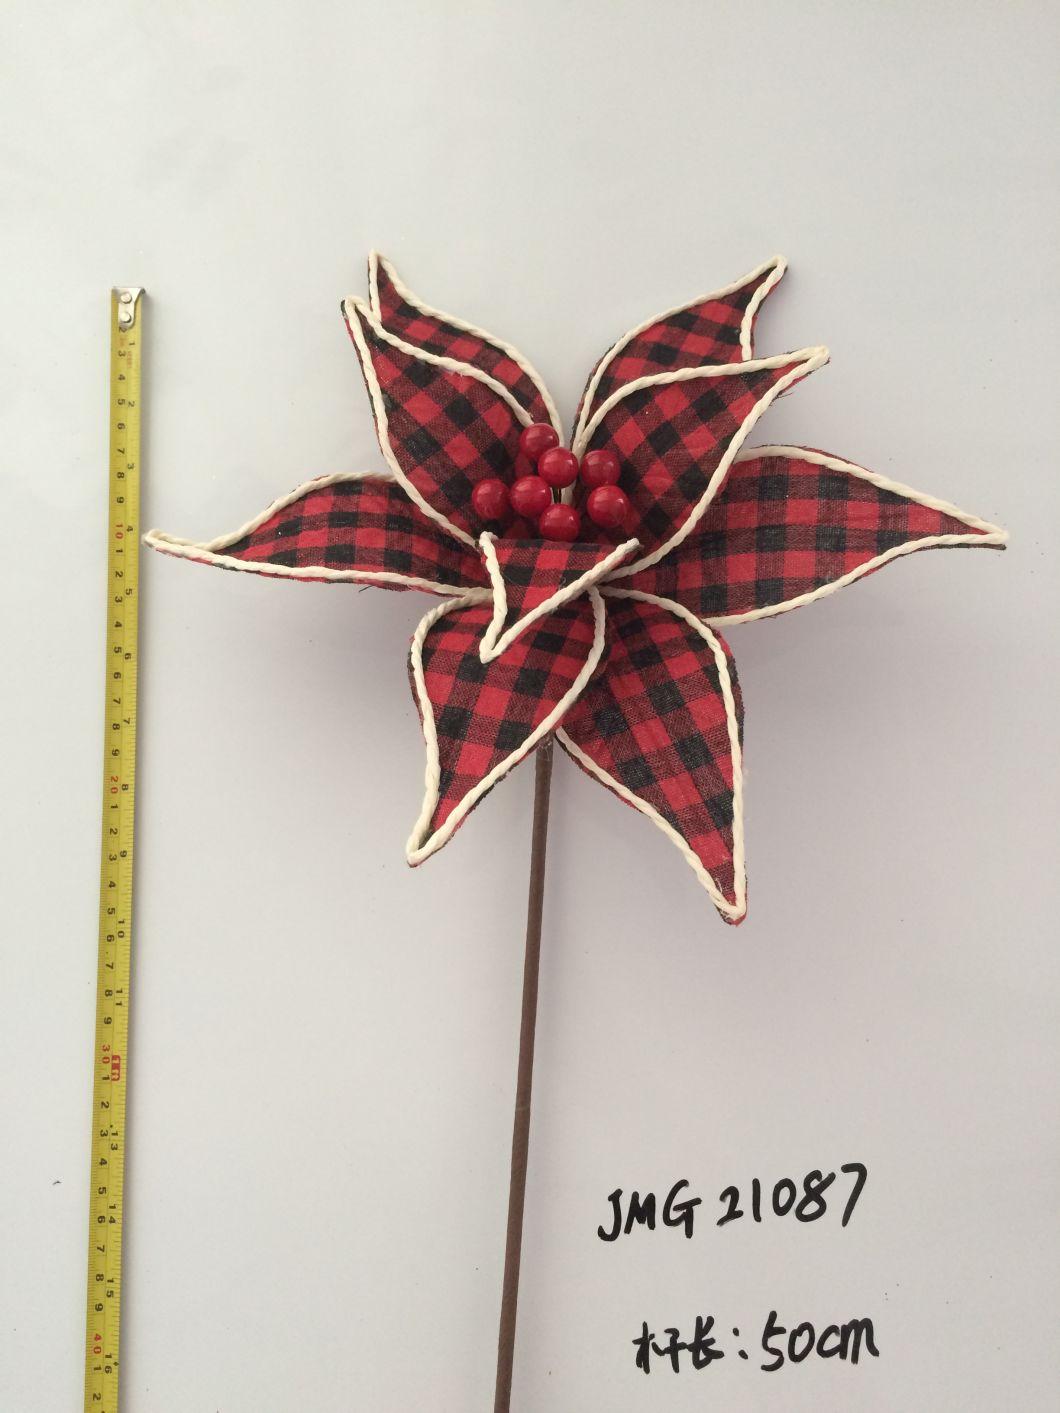 Ytcf105 Customized Poinsettia Flower for Christmas Tree Decor Picks